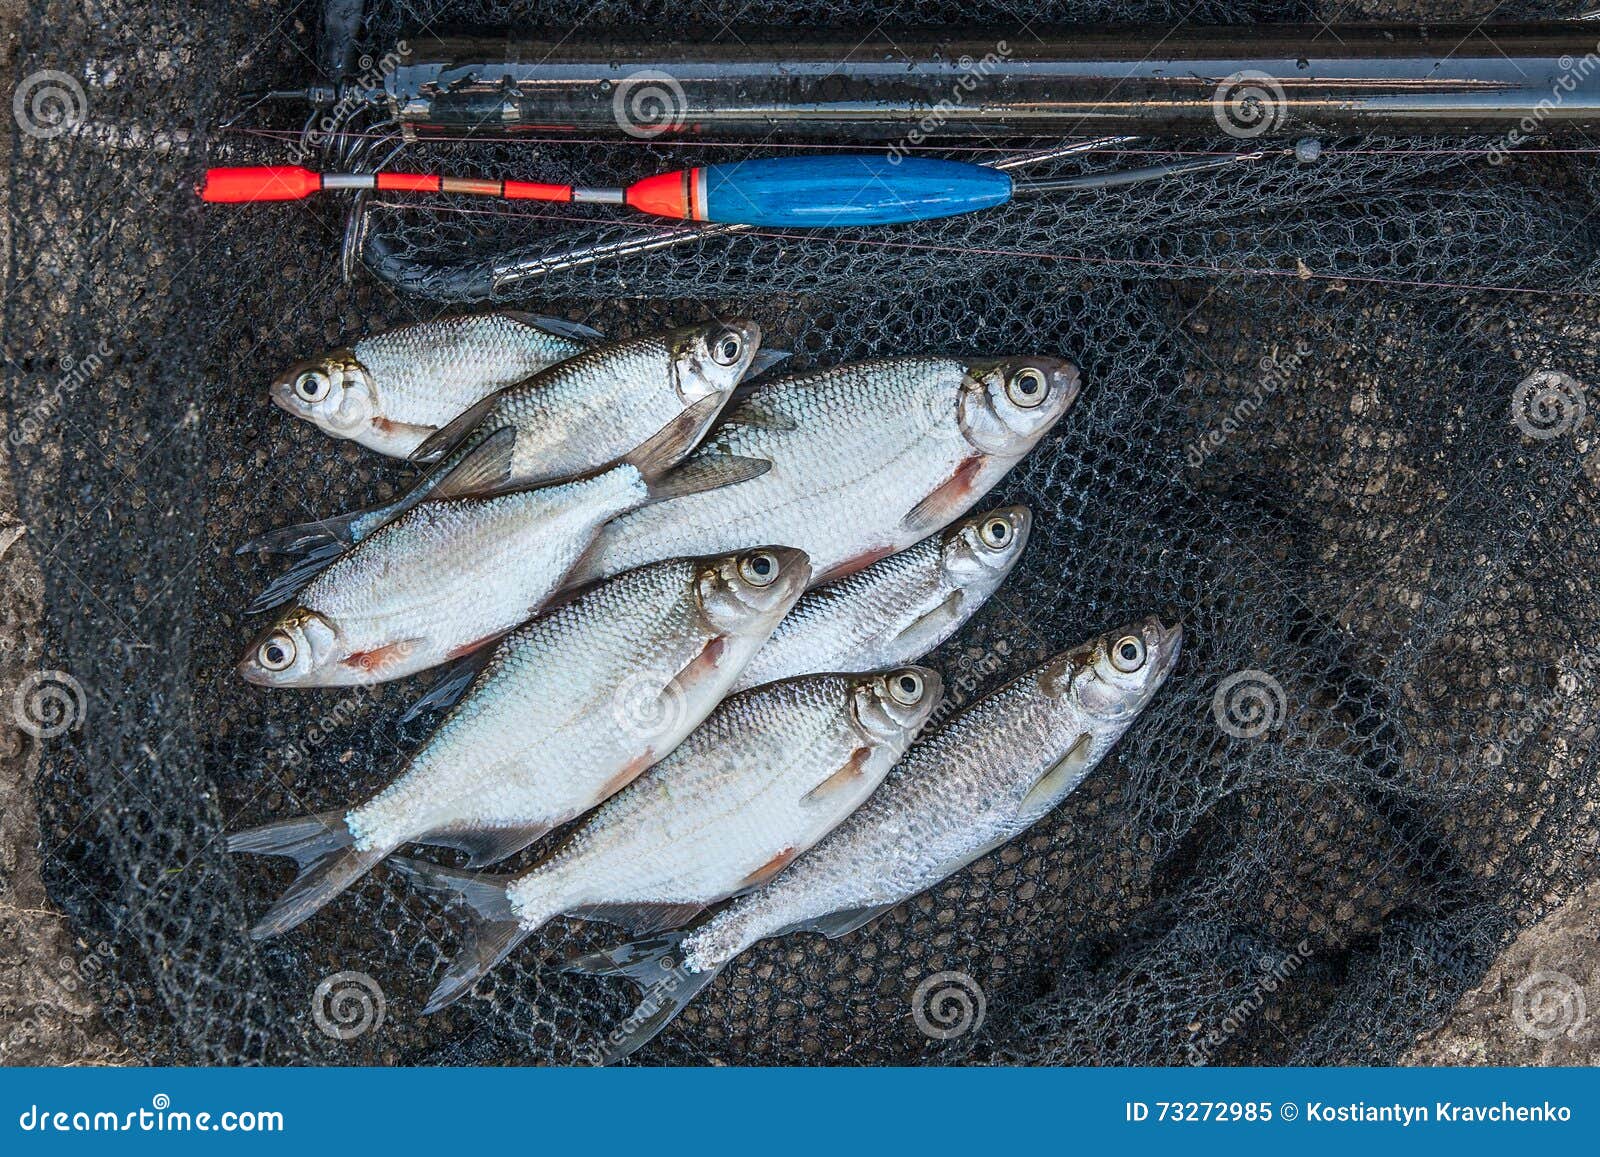 https://thumbs.dreamstime.com/z/several-ablet-bream-fish-fishing-net-fishing-rod-float-freshwater-just-taken-water-as-background-bleak-73272985.jpg